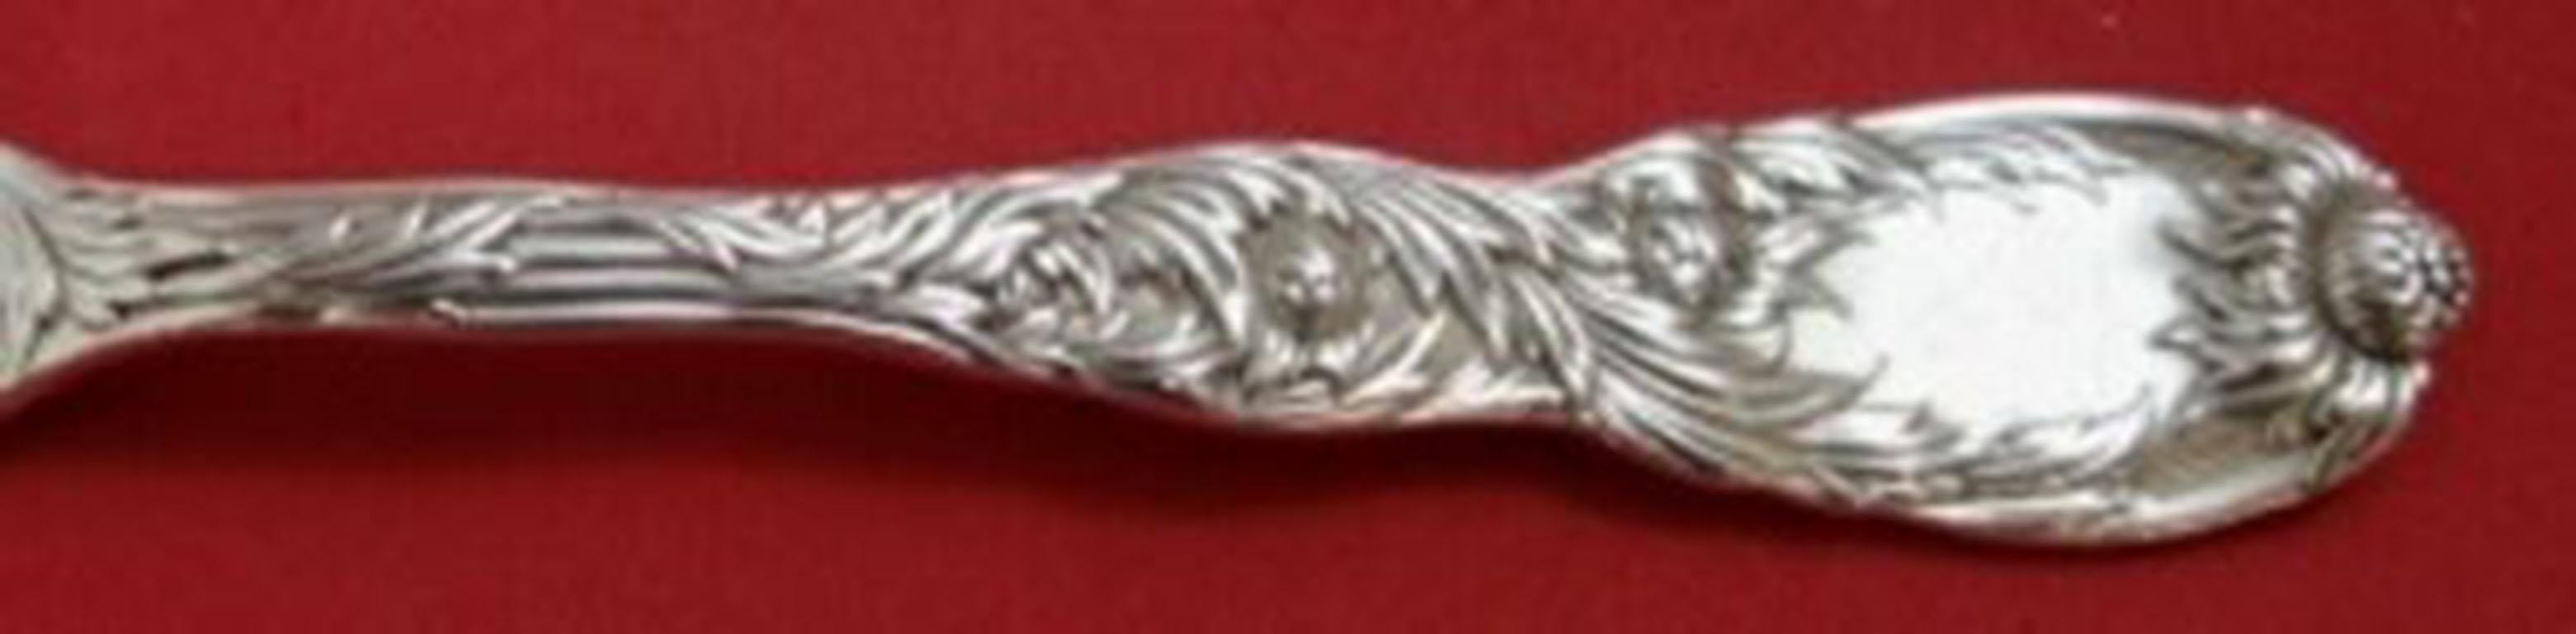 Sterling silver teaspoon 5 7/8